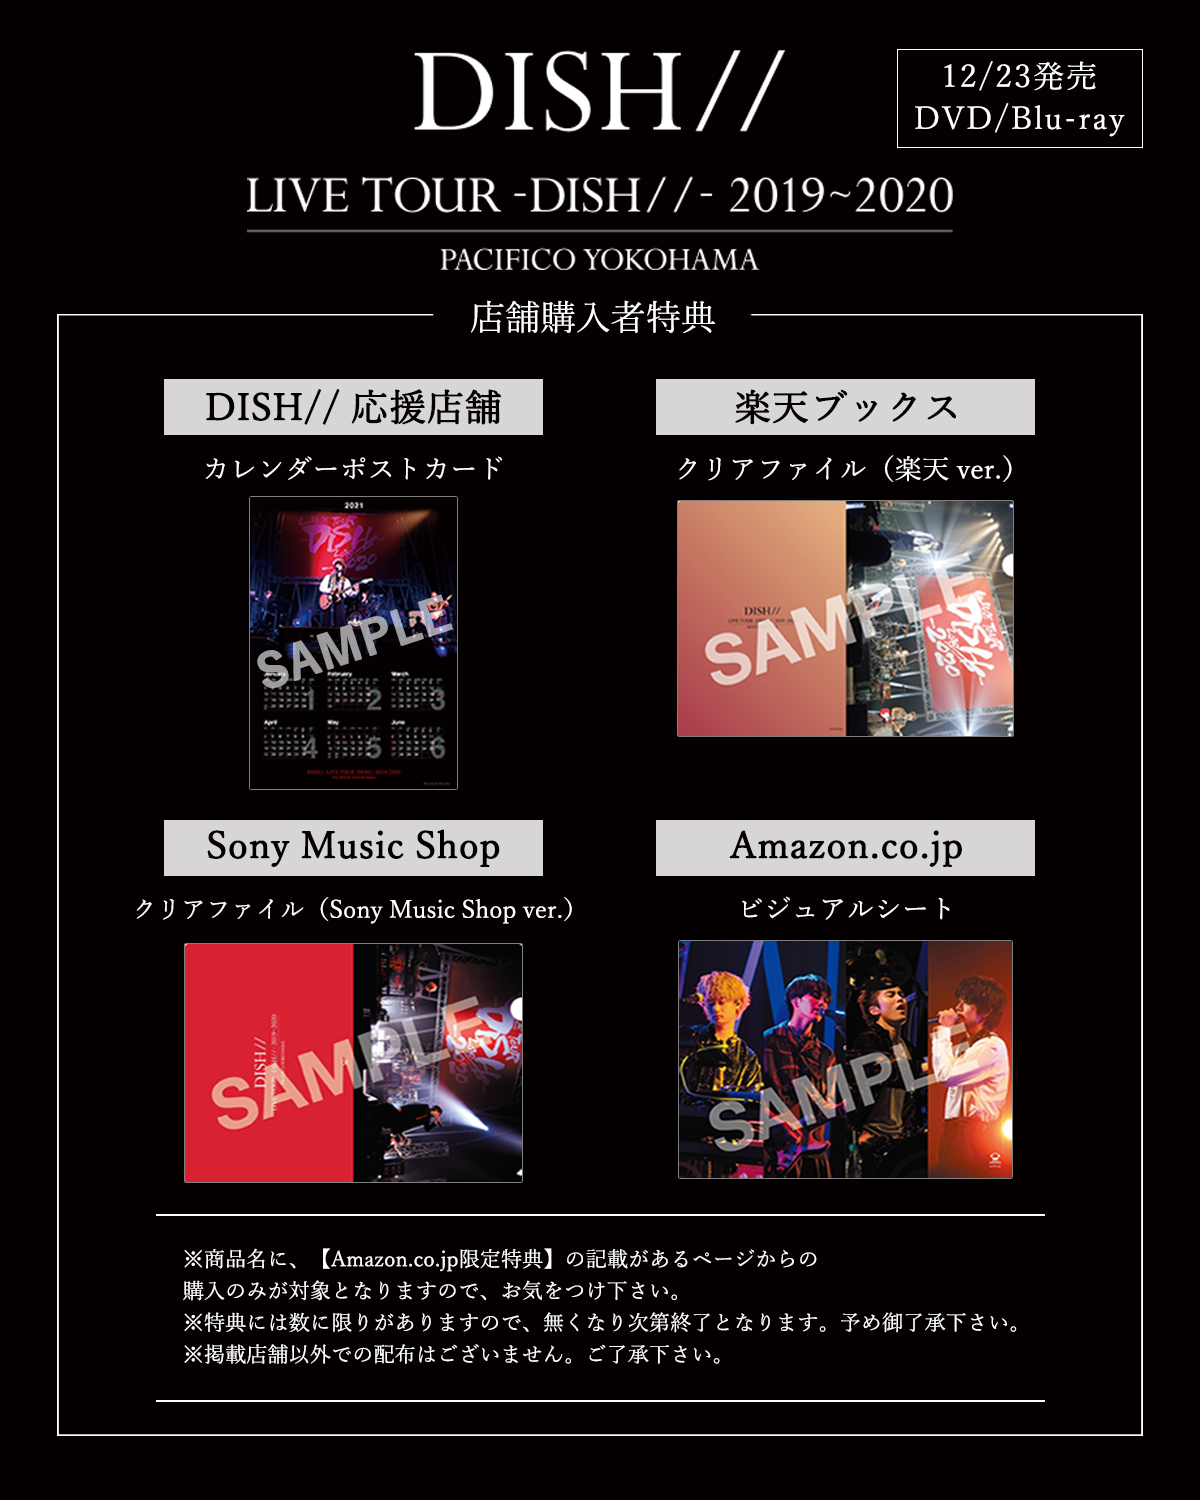 LIVE TOUR -DISH//-2019～2020 PACIFICO DVDDVD/ブルーレイ